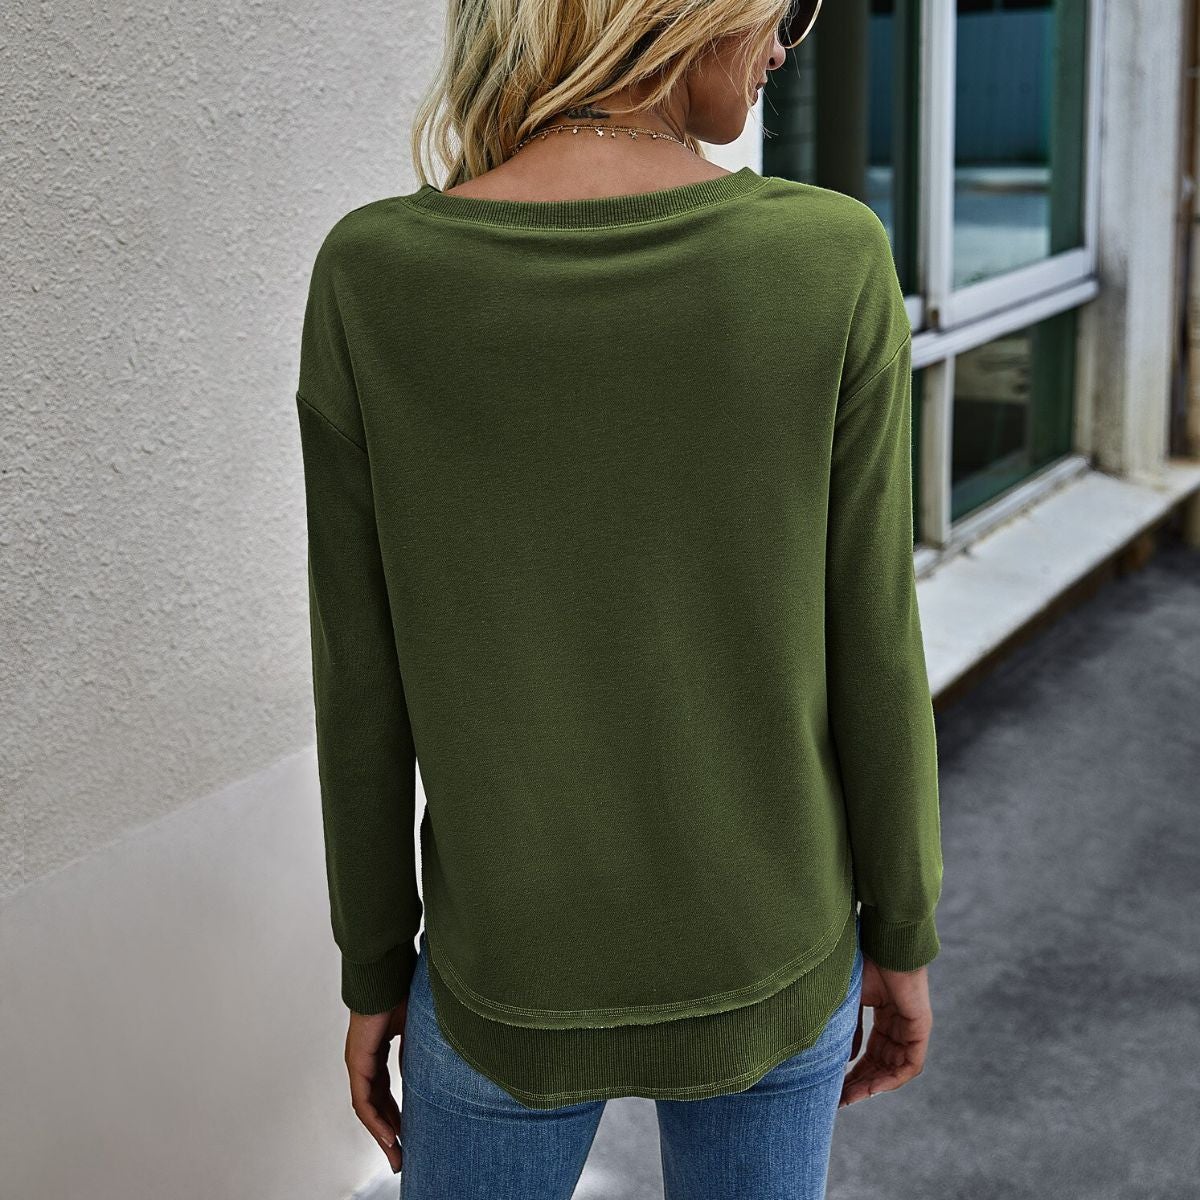 Benedikta - Casual Sweatshirt mit eleganter Passform